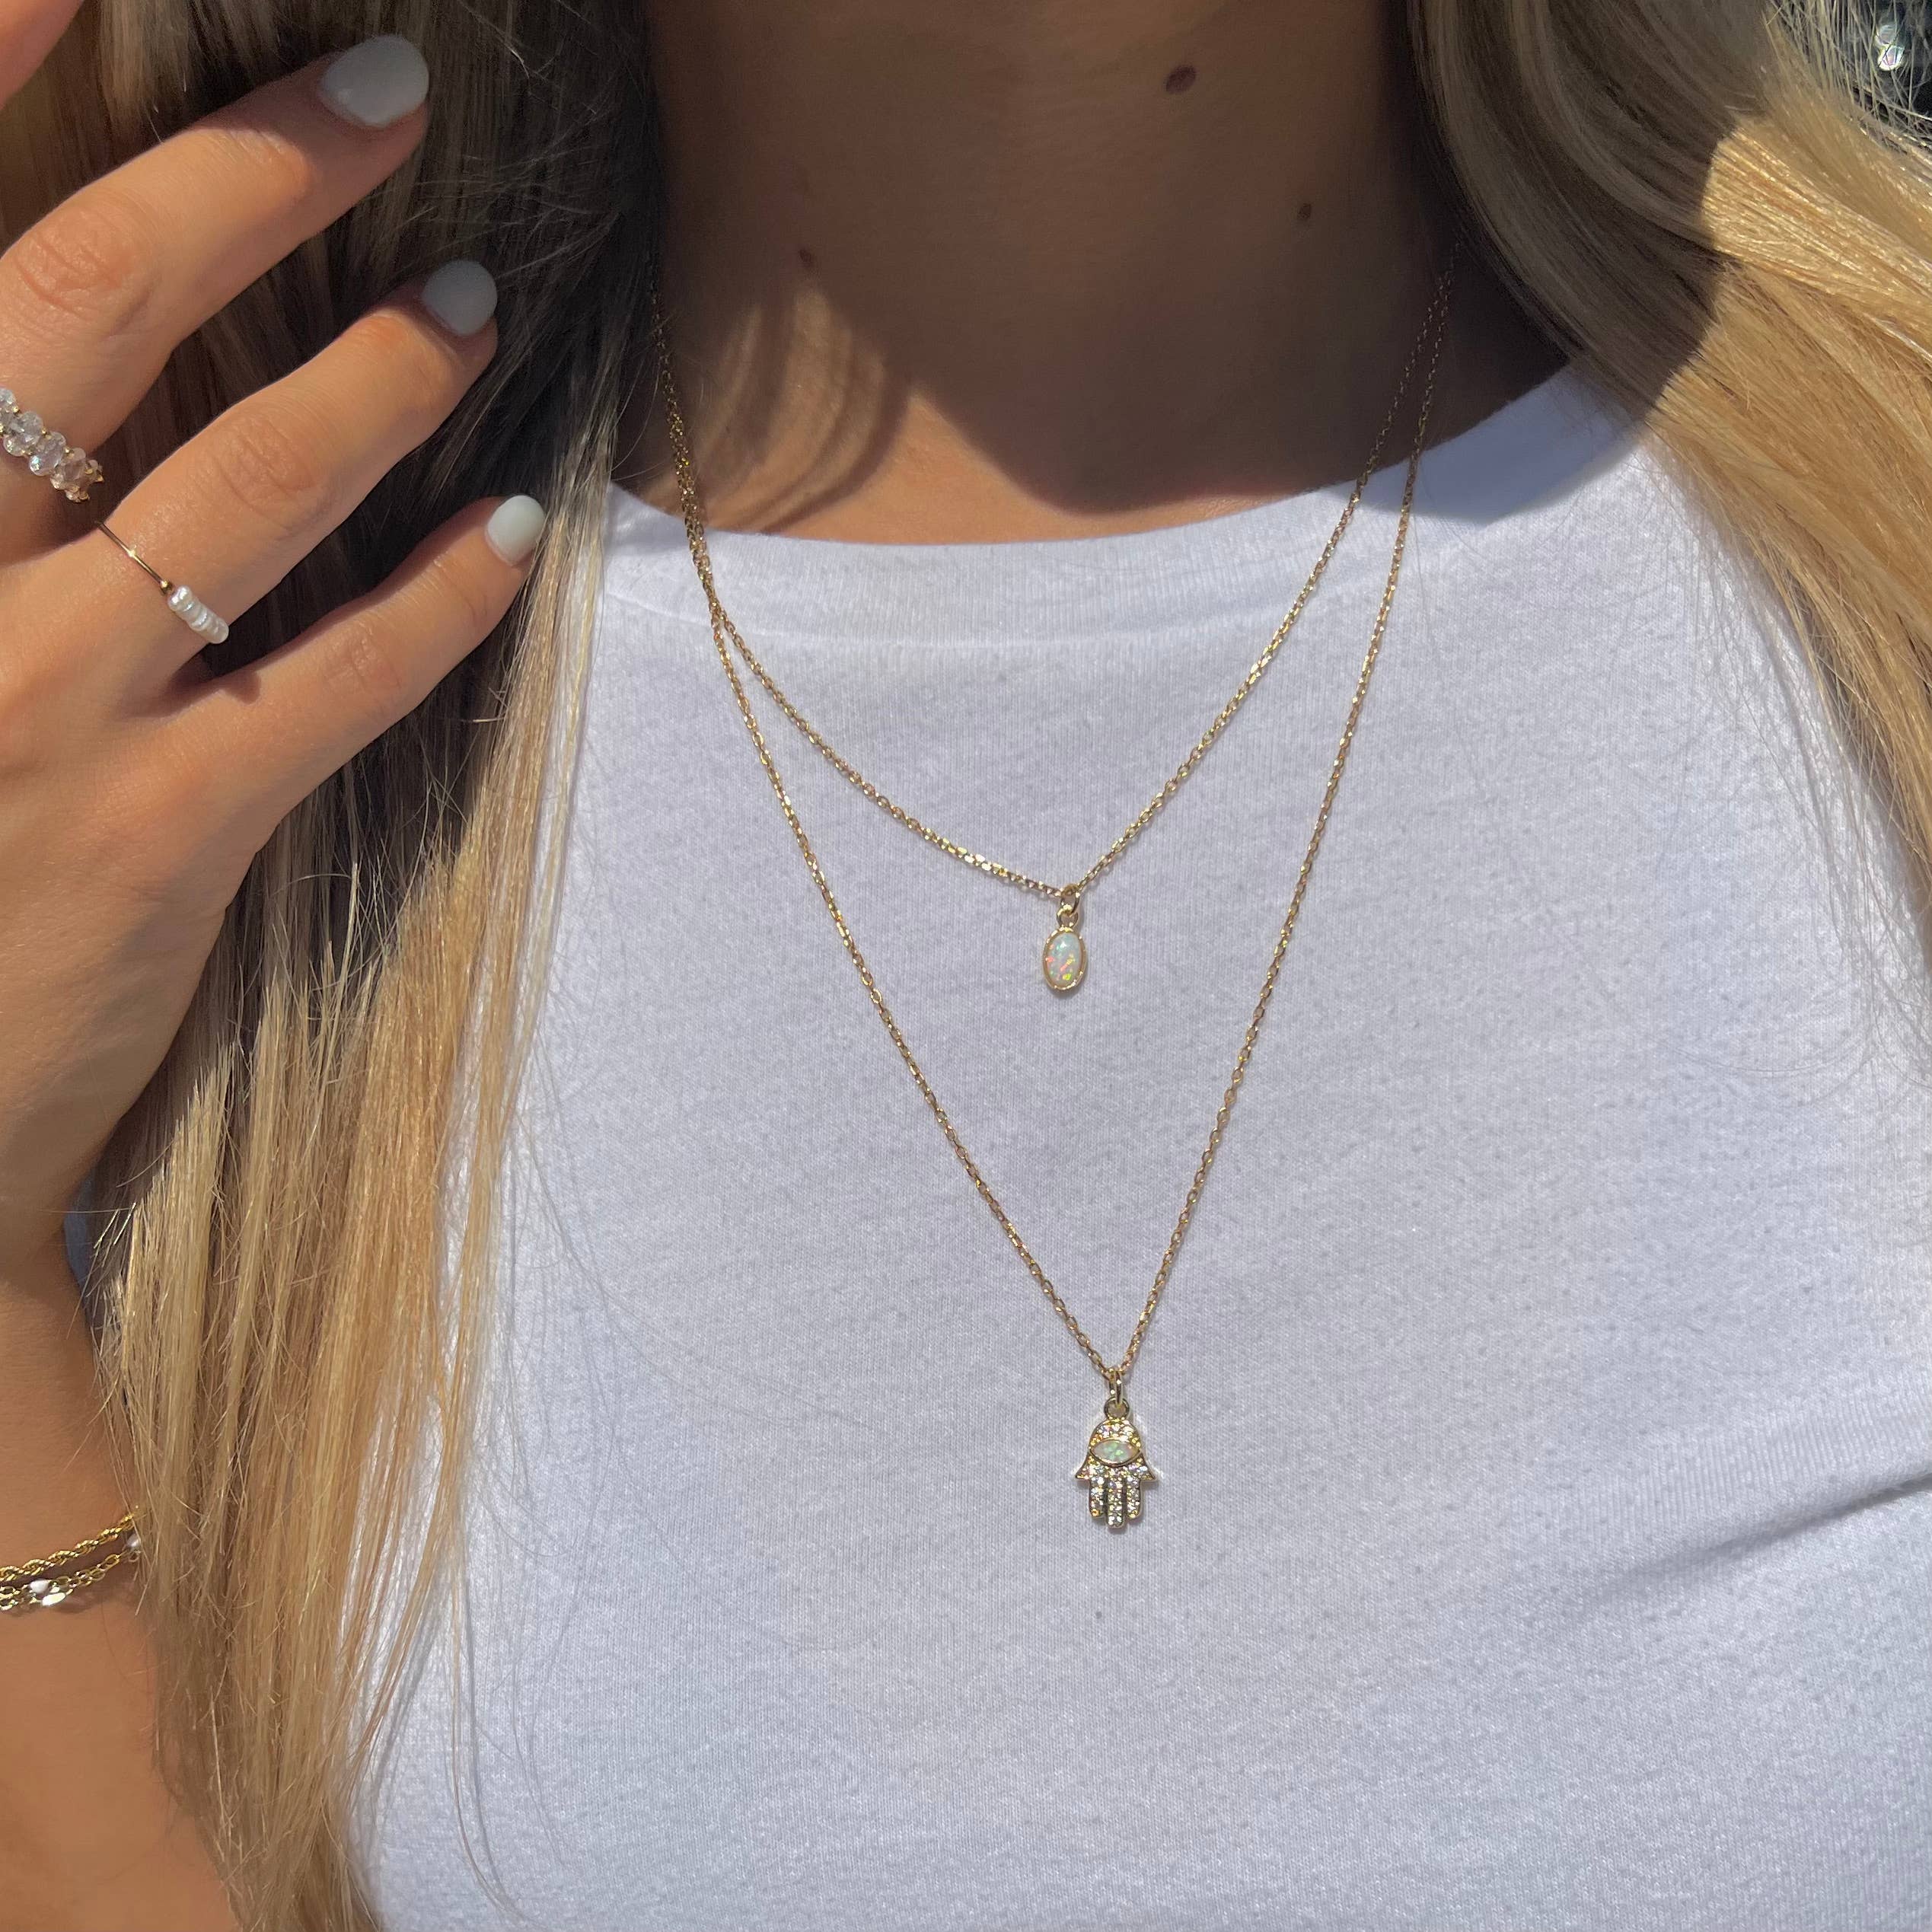 Opal Necklaces: Gold Opal